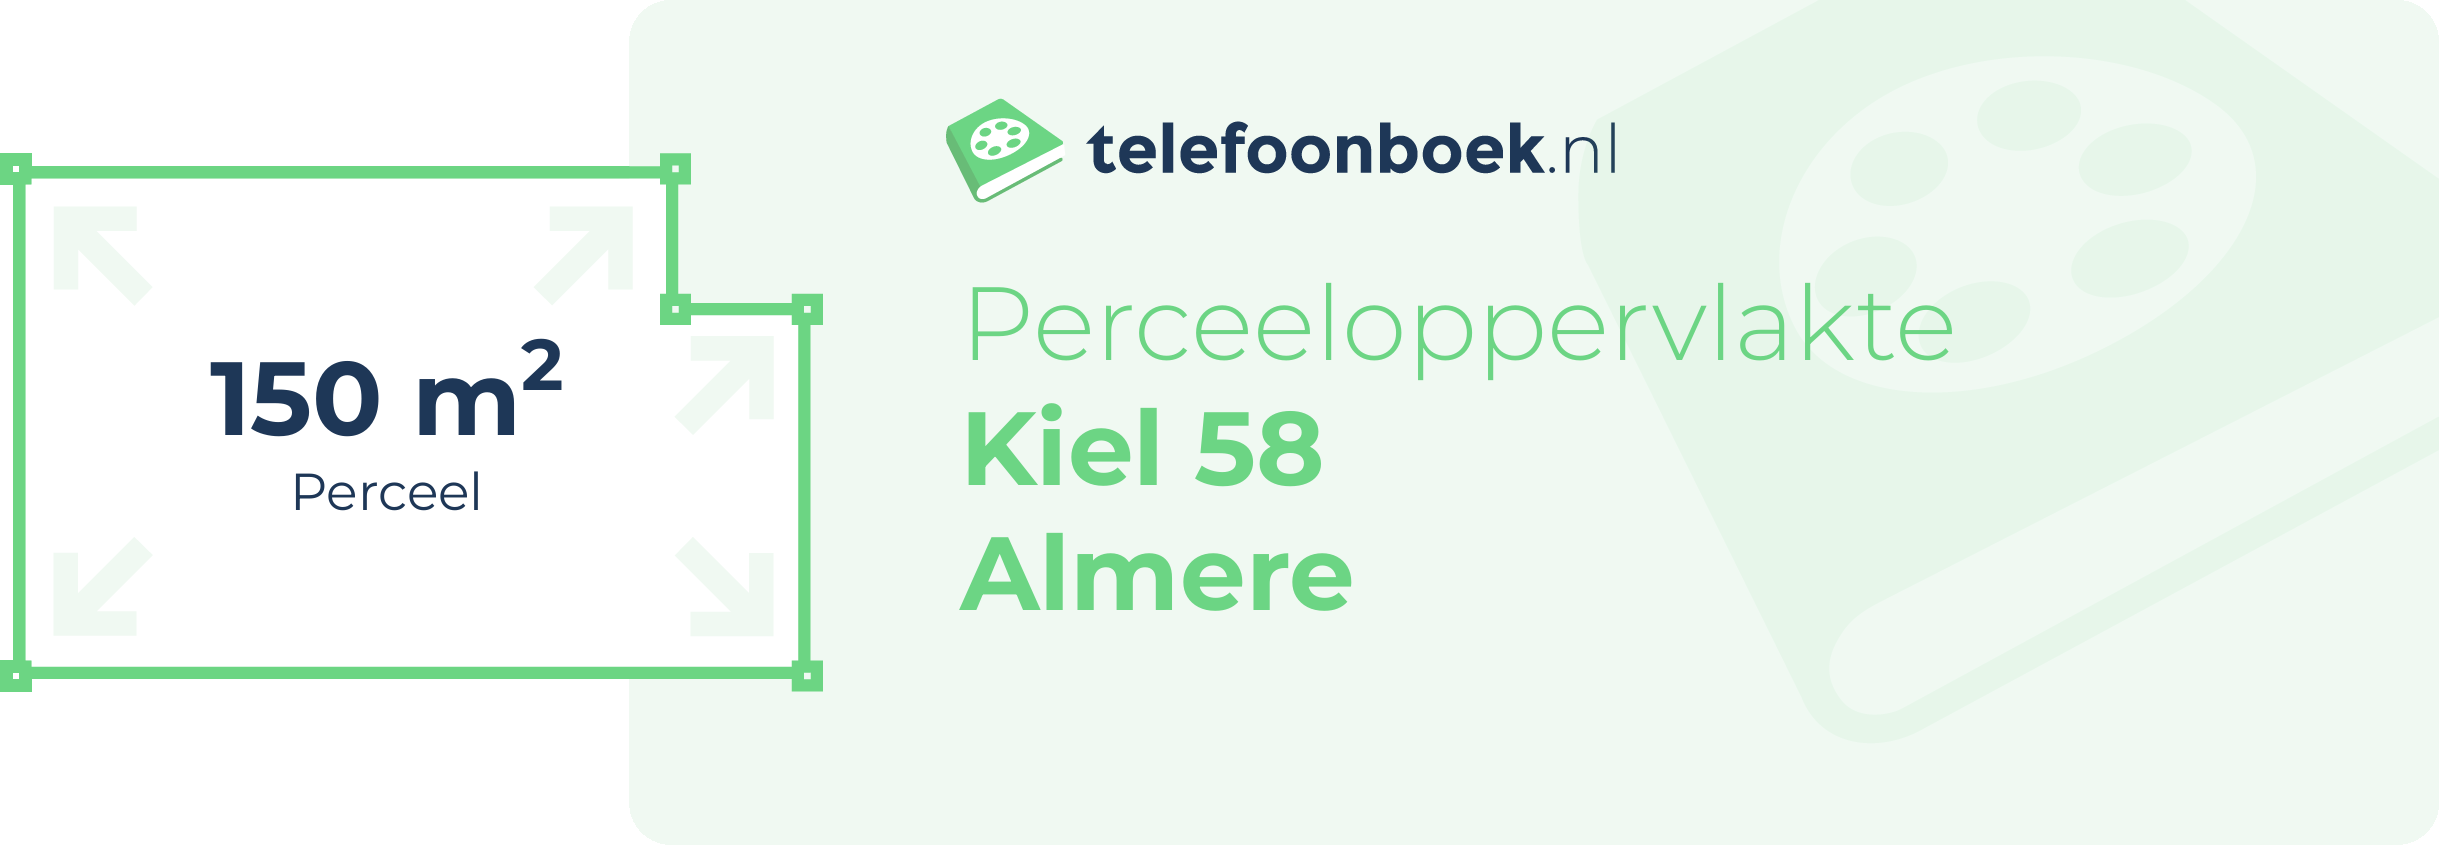 Perceeloppervlakte Kiel 58 Almere